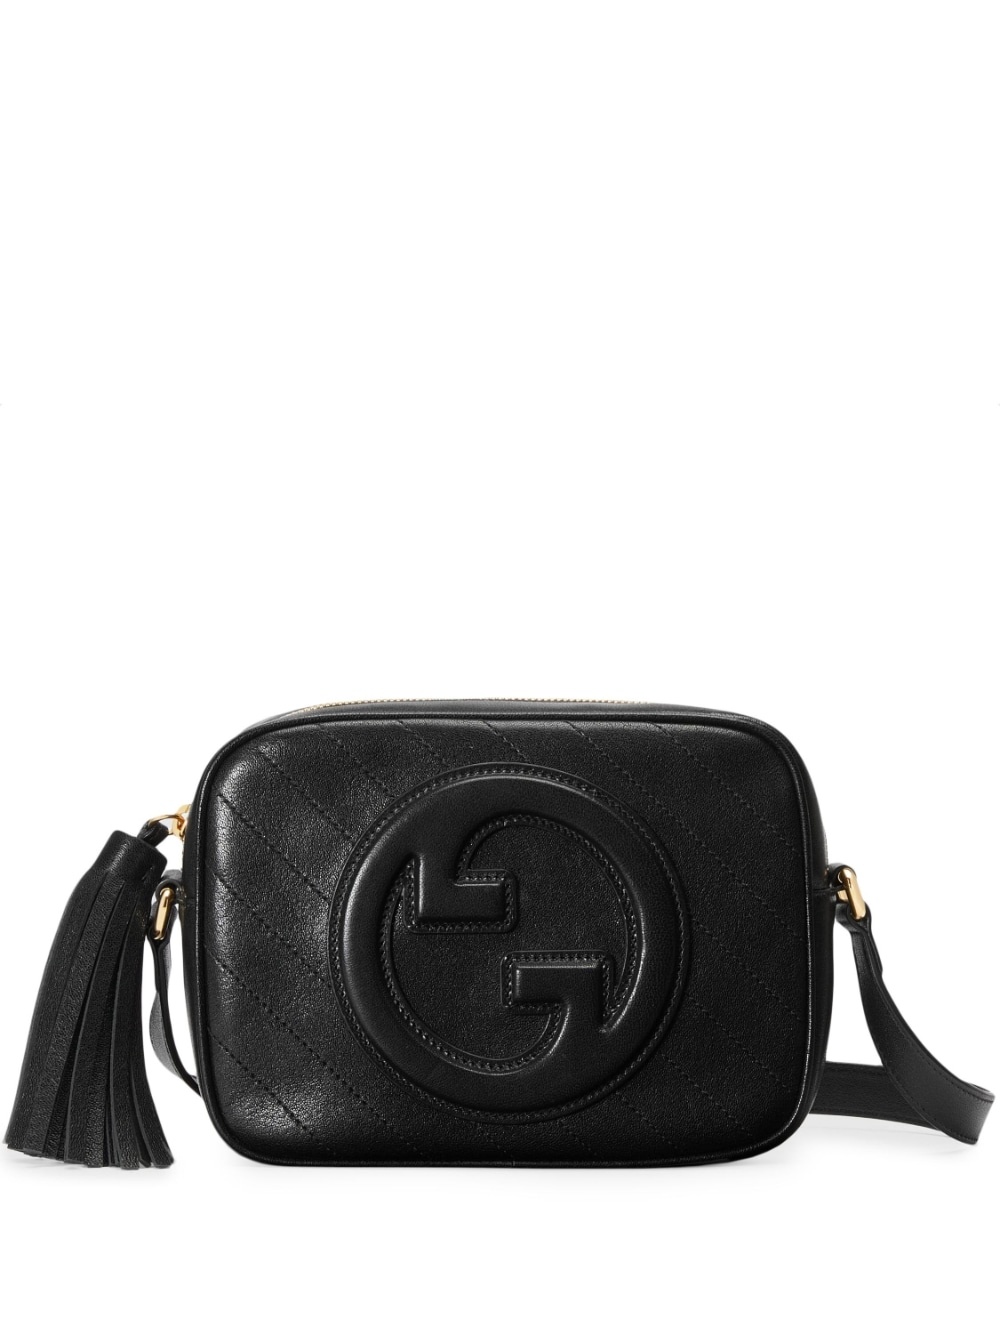 Blondie leather crossbody bag - 1